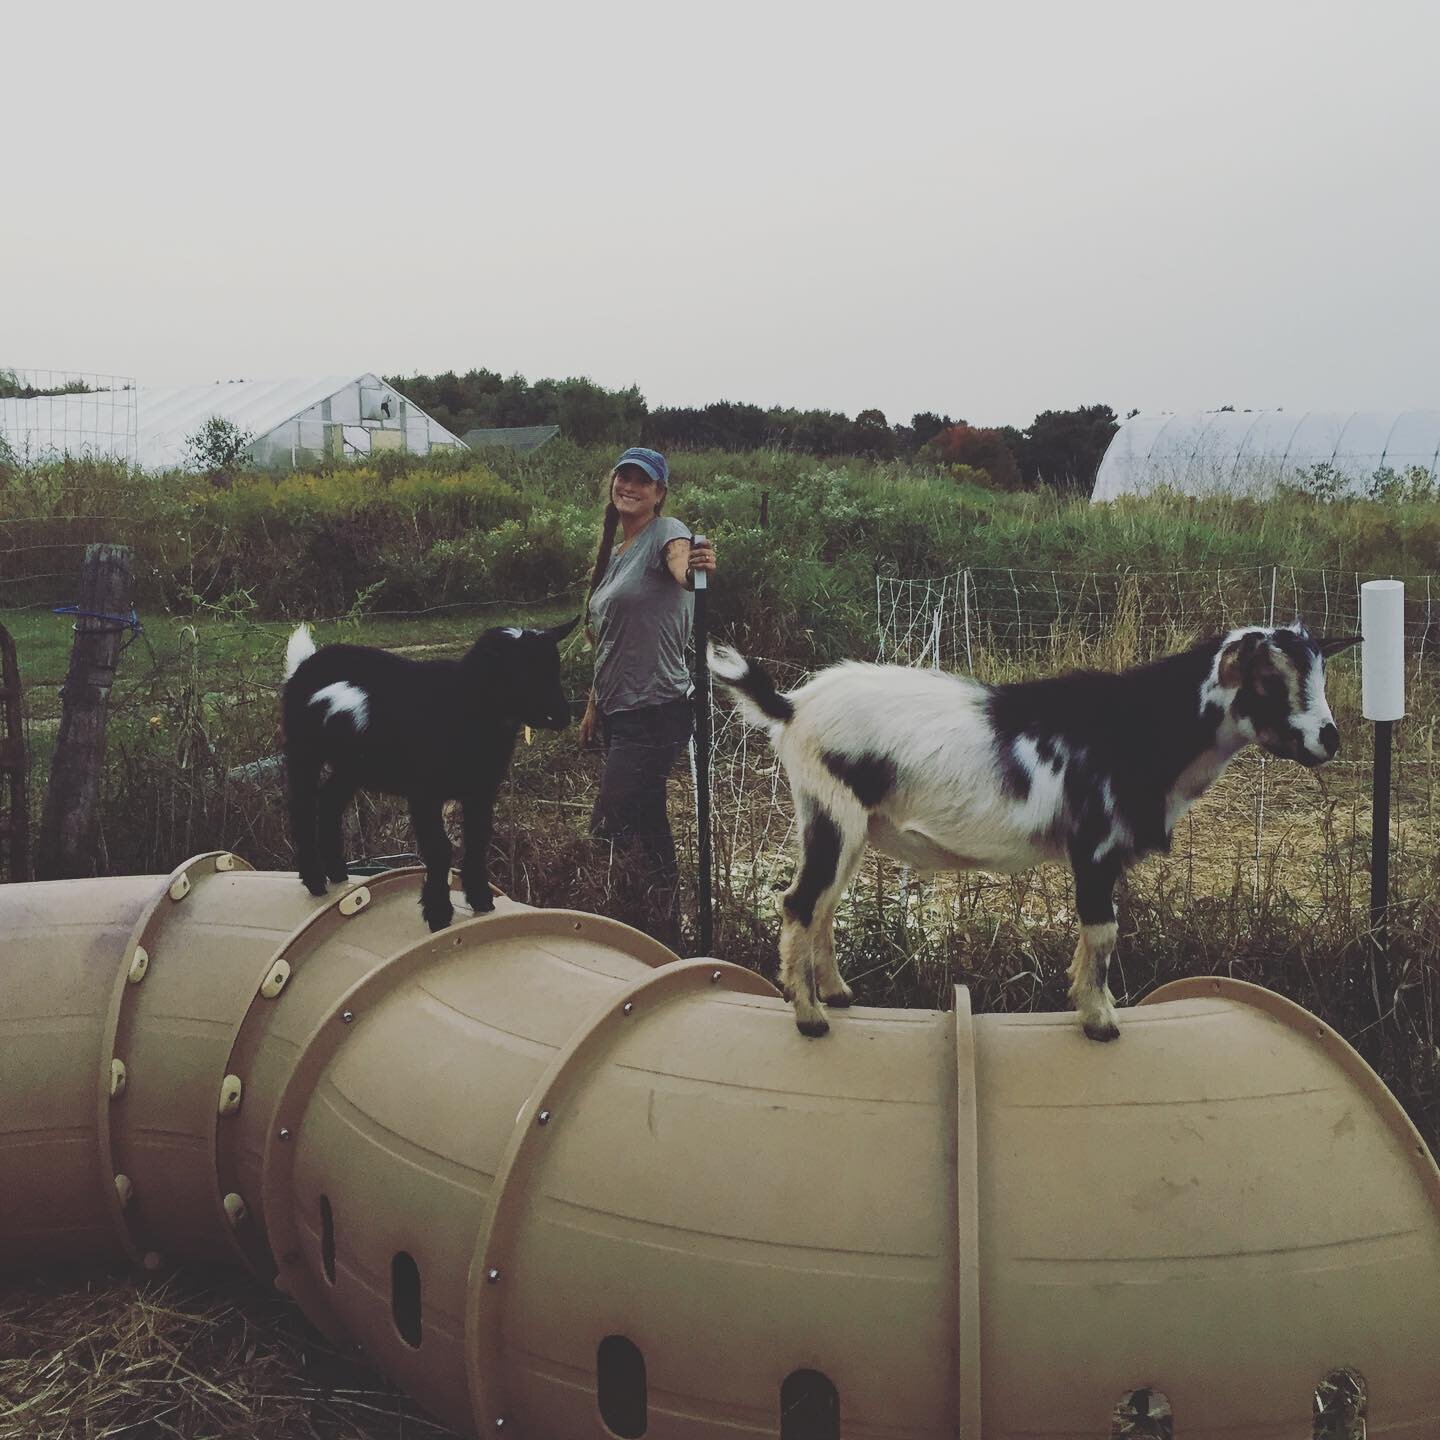 Goats at play #goatsofinstagram #playgroundsareforkids #tapdance